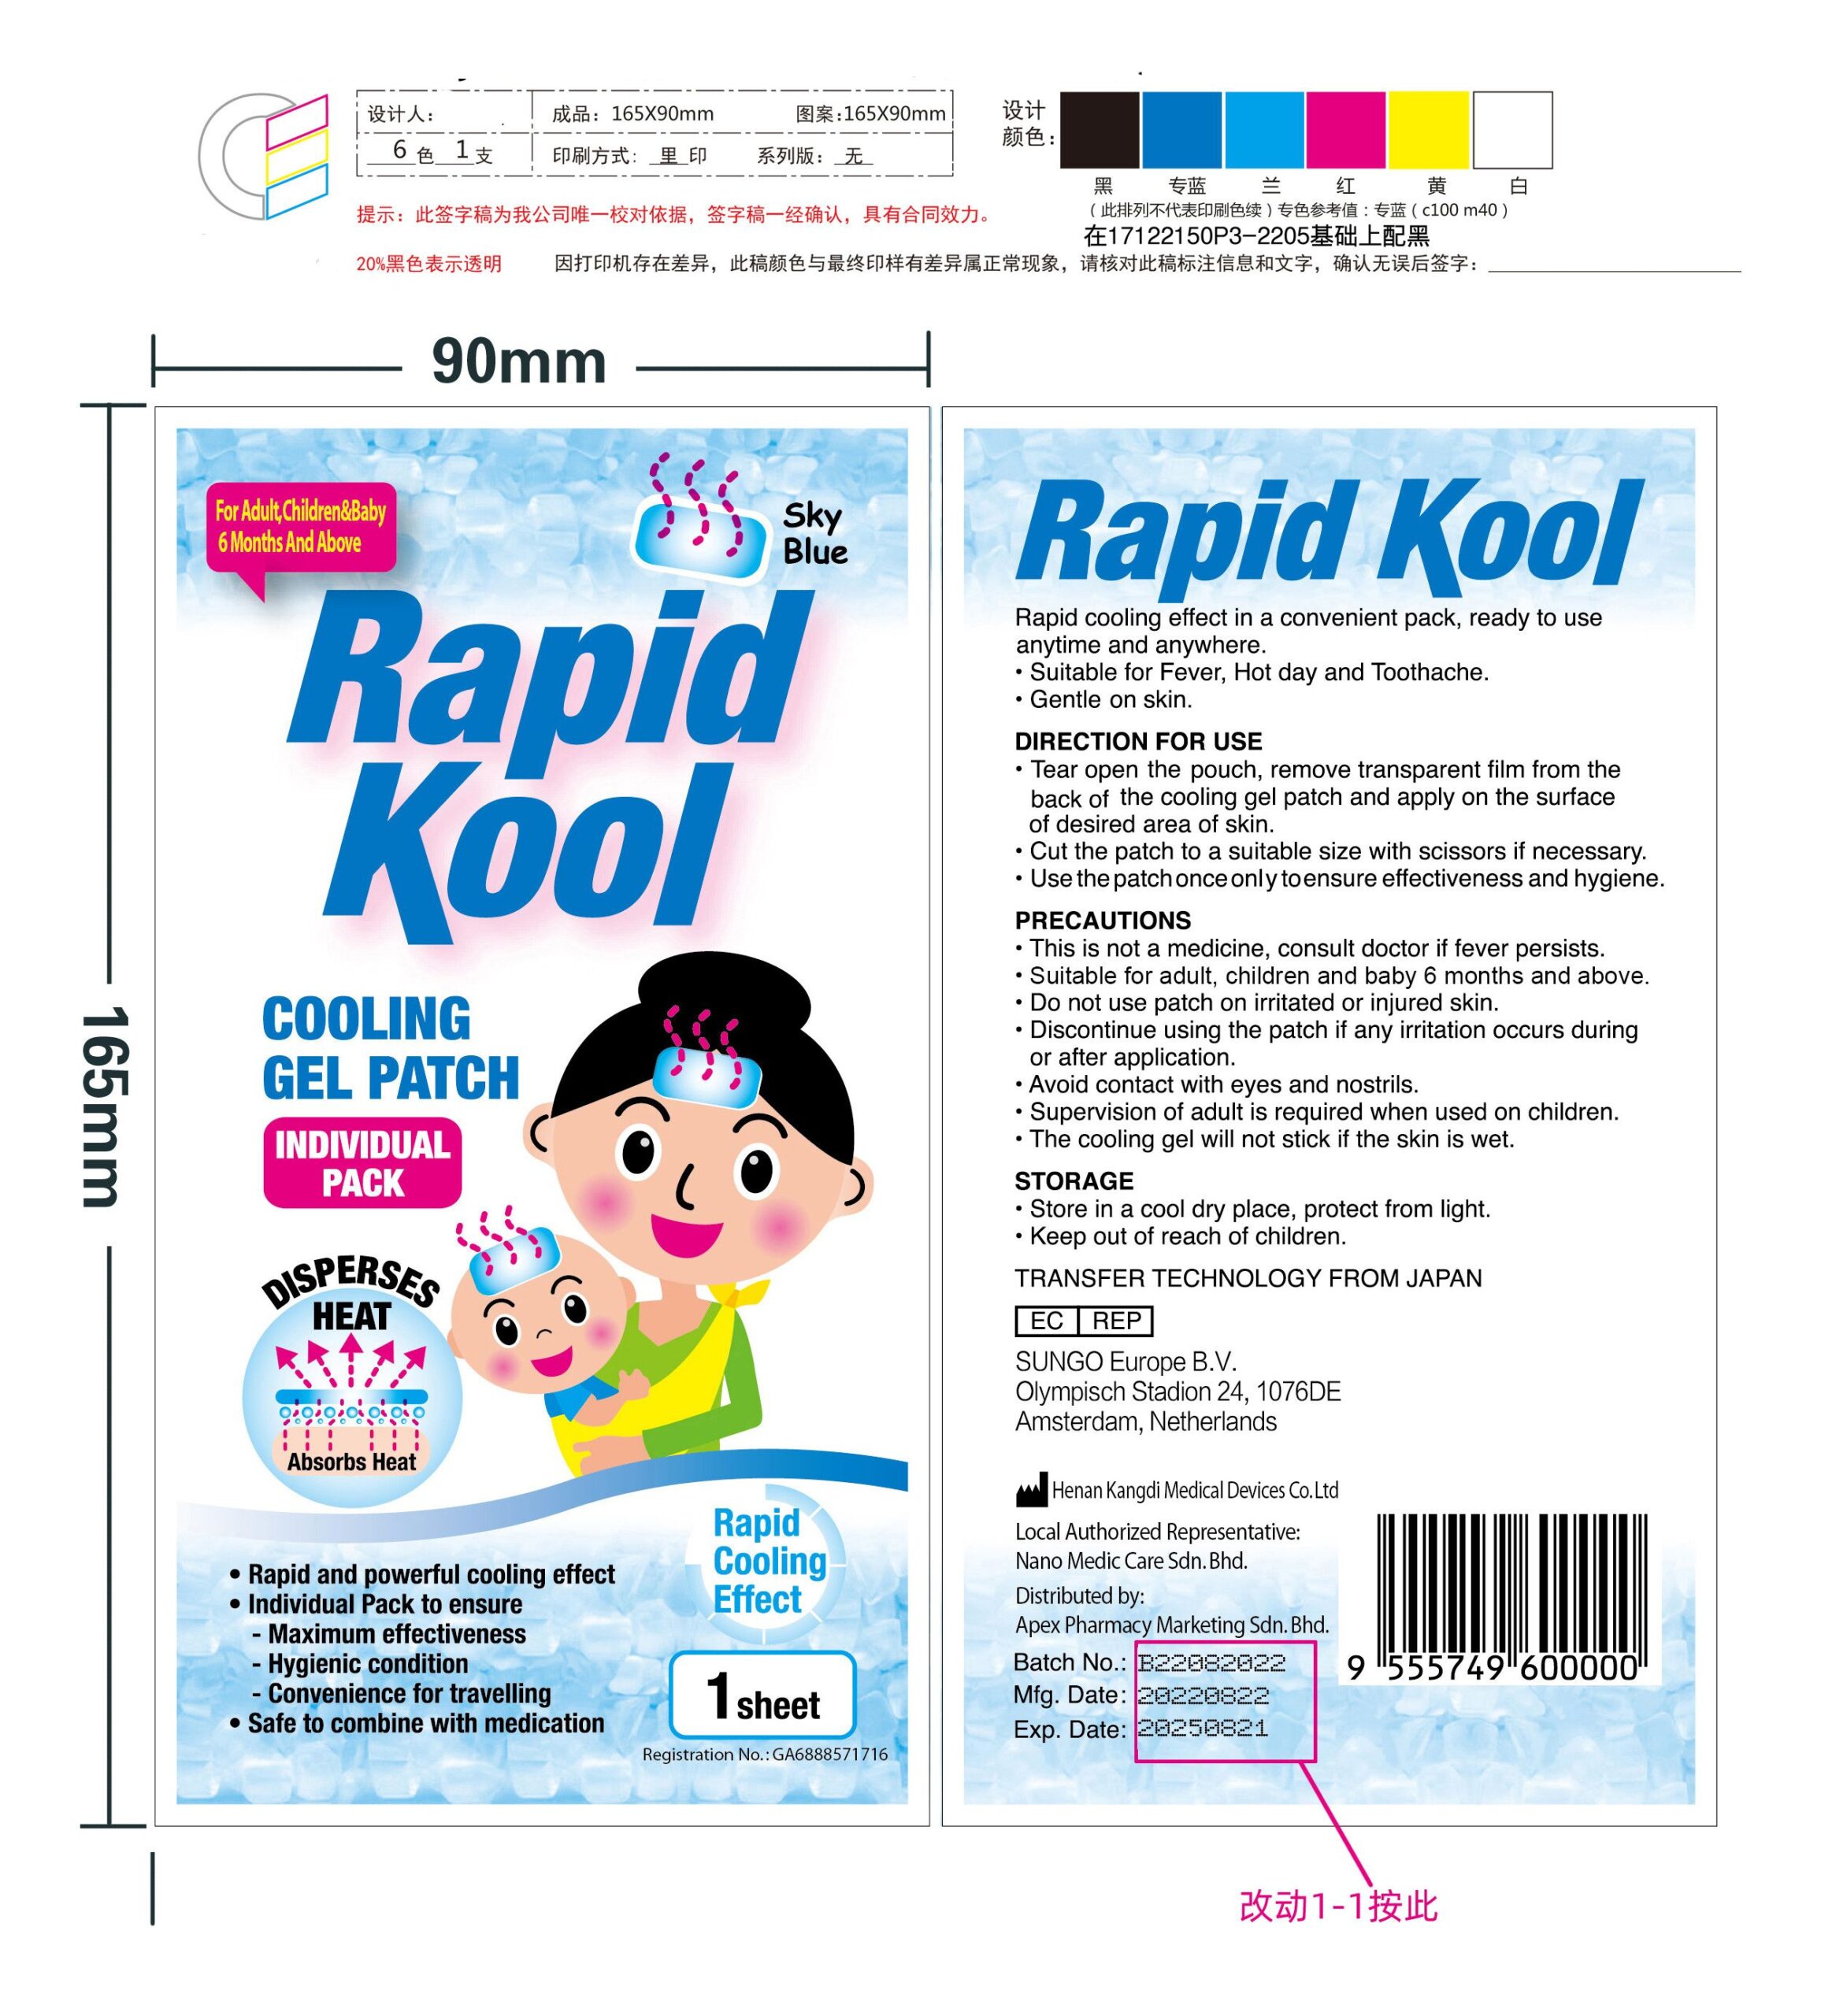 Rapid kool 是一款高效无管胰岛素泵，通过其创新技术提供快速胰岛素输送。凭借rapid kool 的便利性和有效性，管理糖尿病变得前所未有的简单。